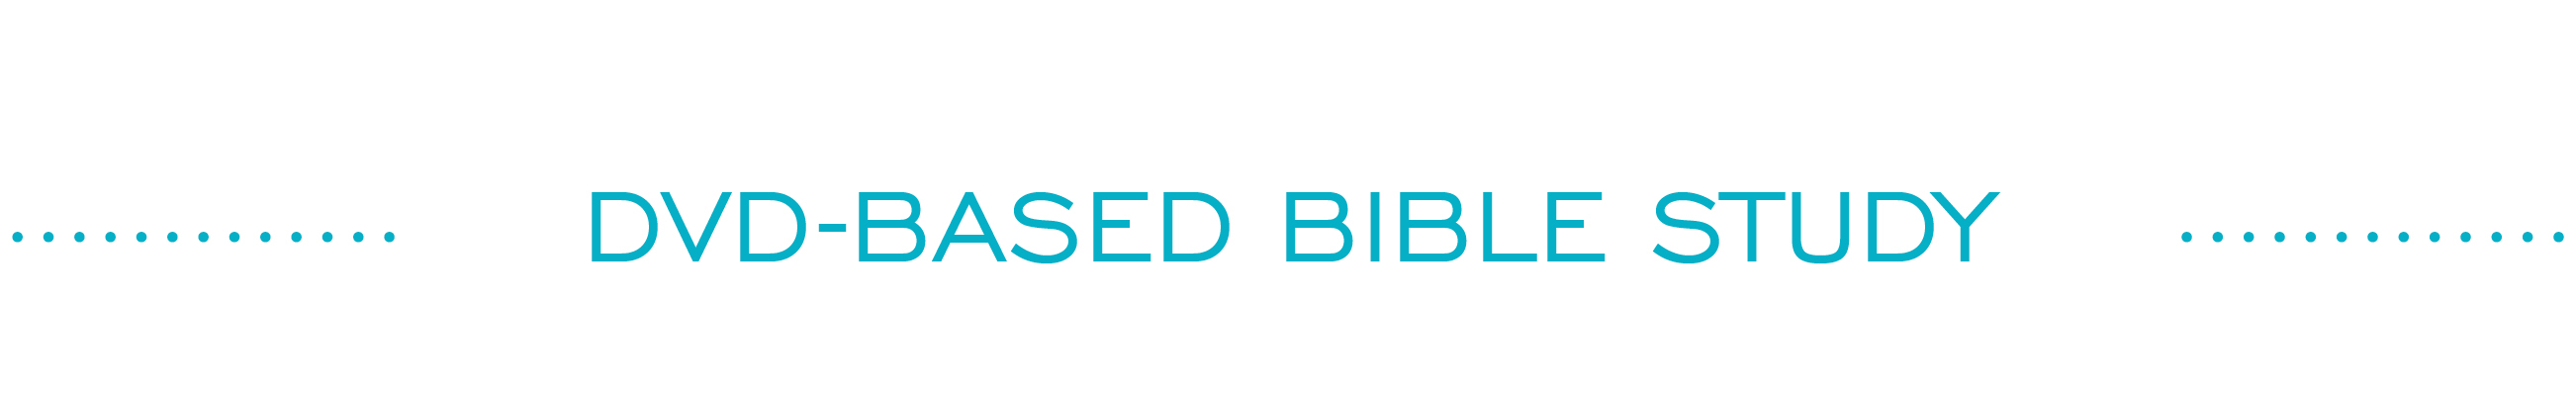 video-based bible study header image